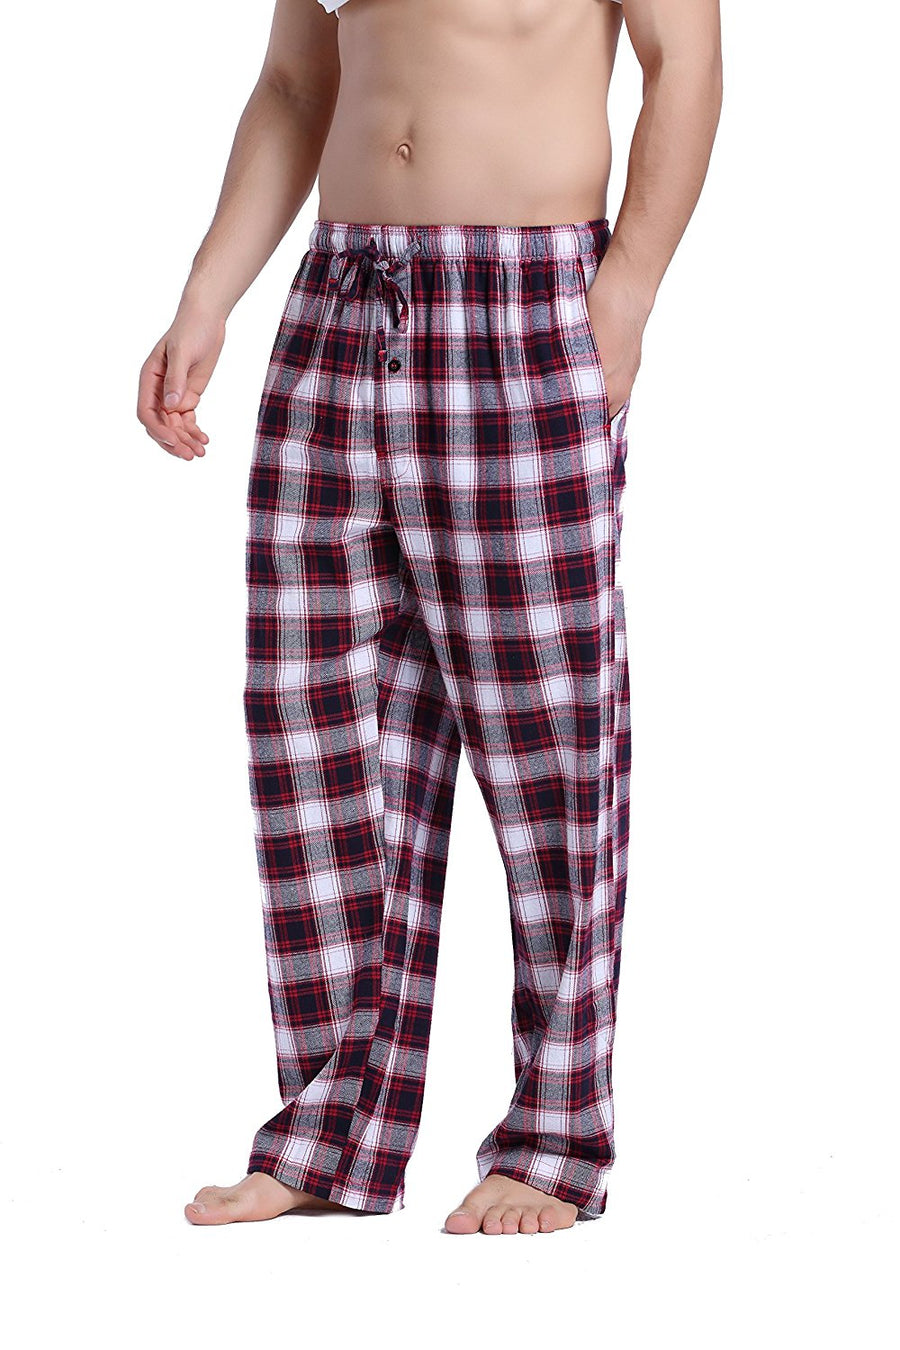 Buy CYZ Mens 100% Cotton Pajama Pants Sleep Lounge Pajamas for Men Woven pj  Pants, F127, Small at